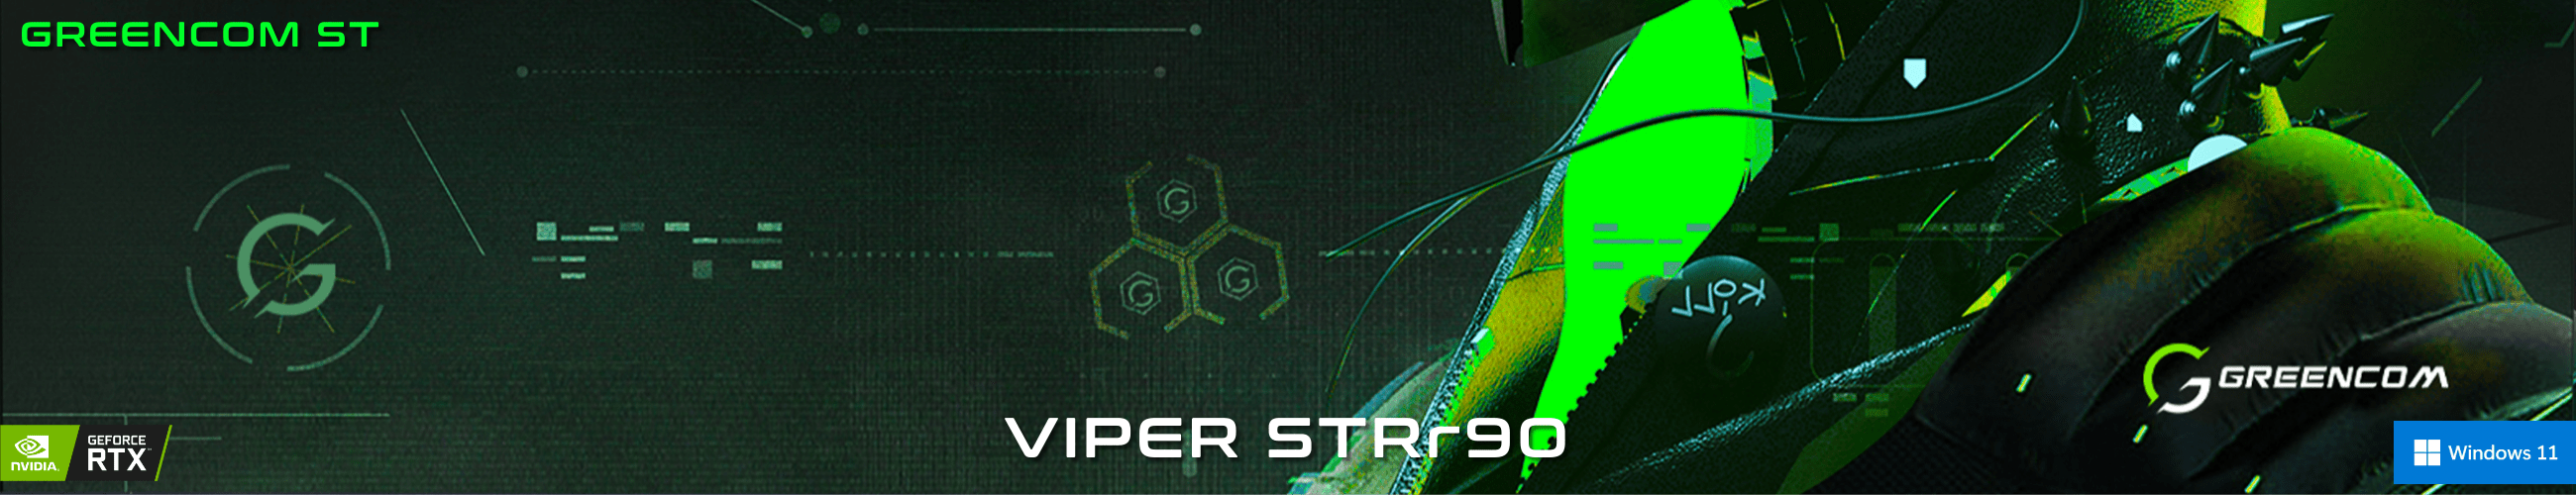 Greencom VIPER STR490